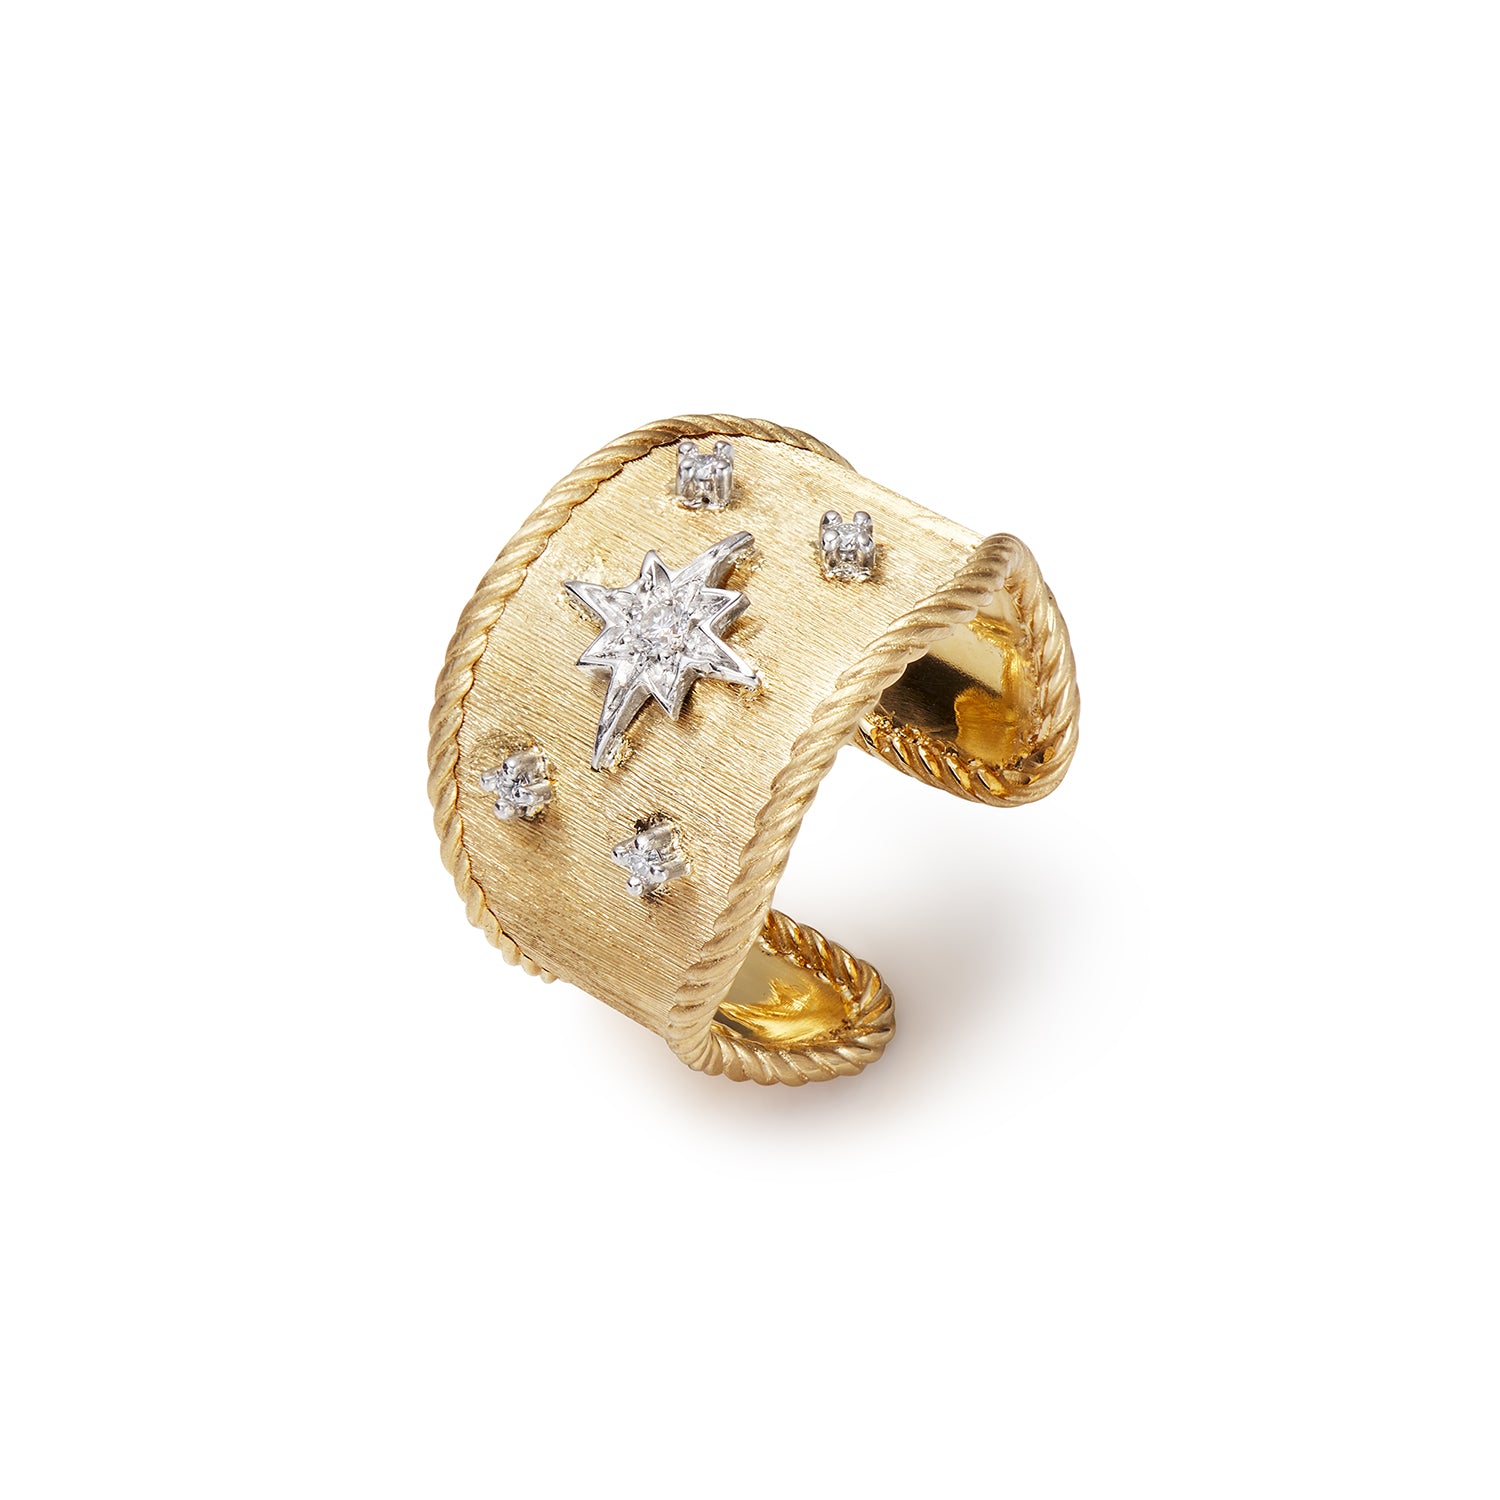 Nebu 1.6 cm ring with diamonds